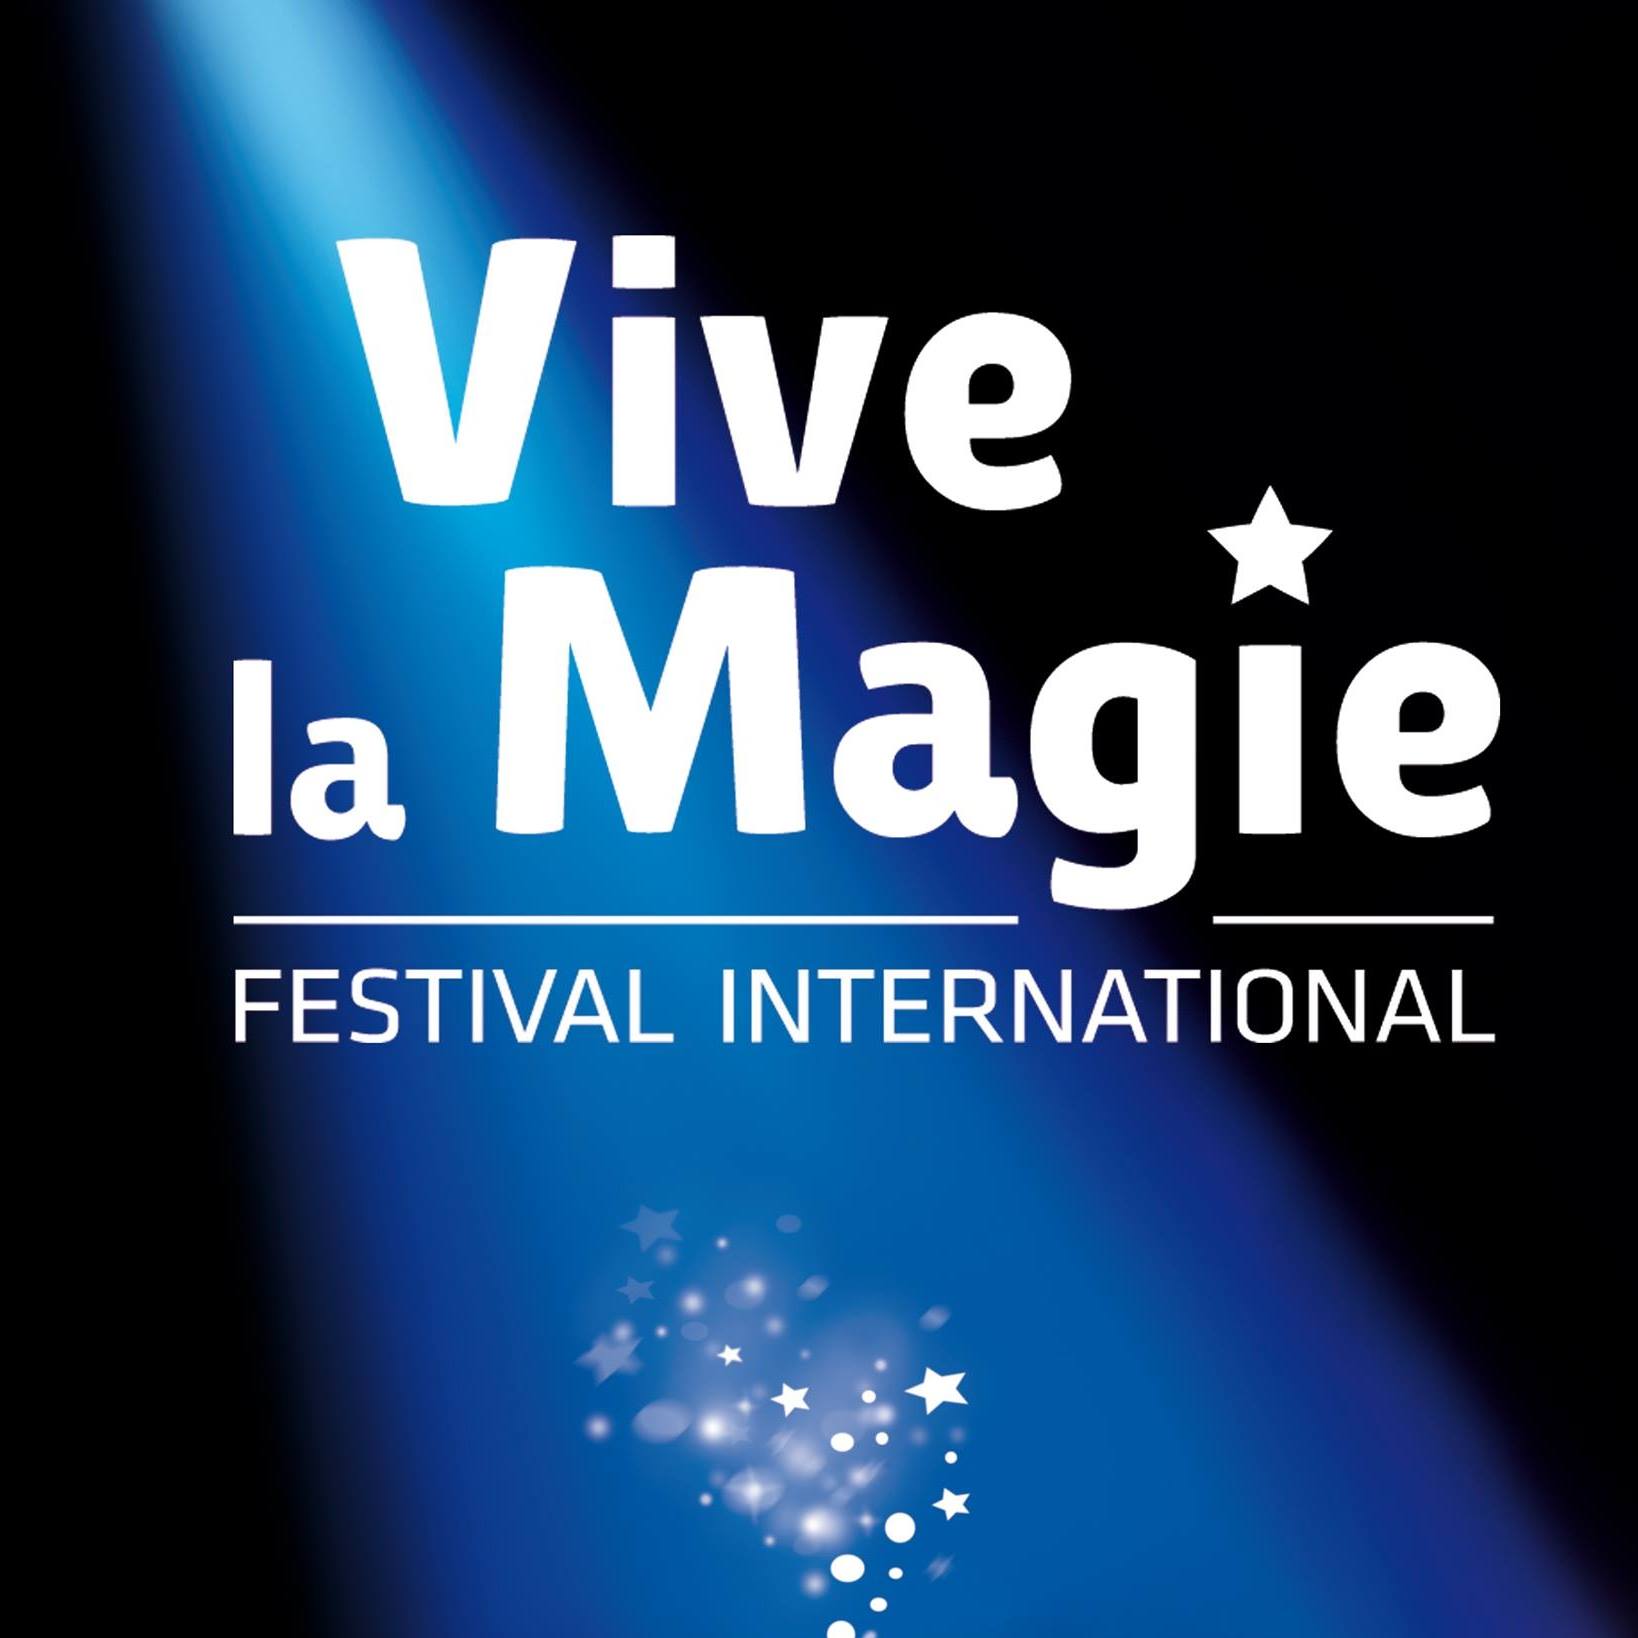 Festival International Vive La Magie 16eme Edition in der Atlantia Tickets